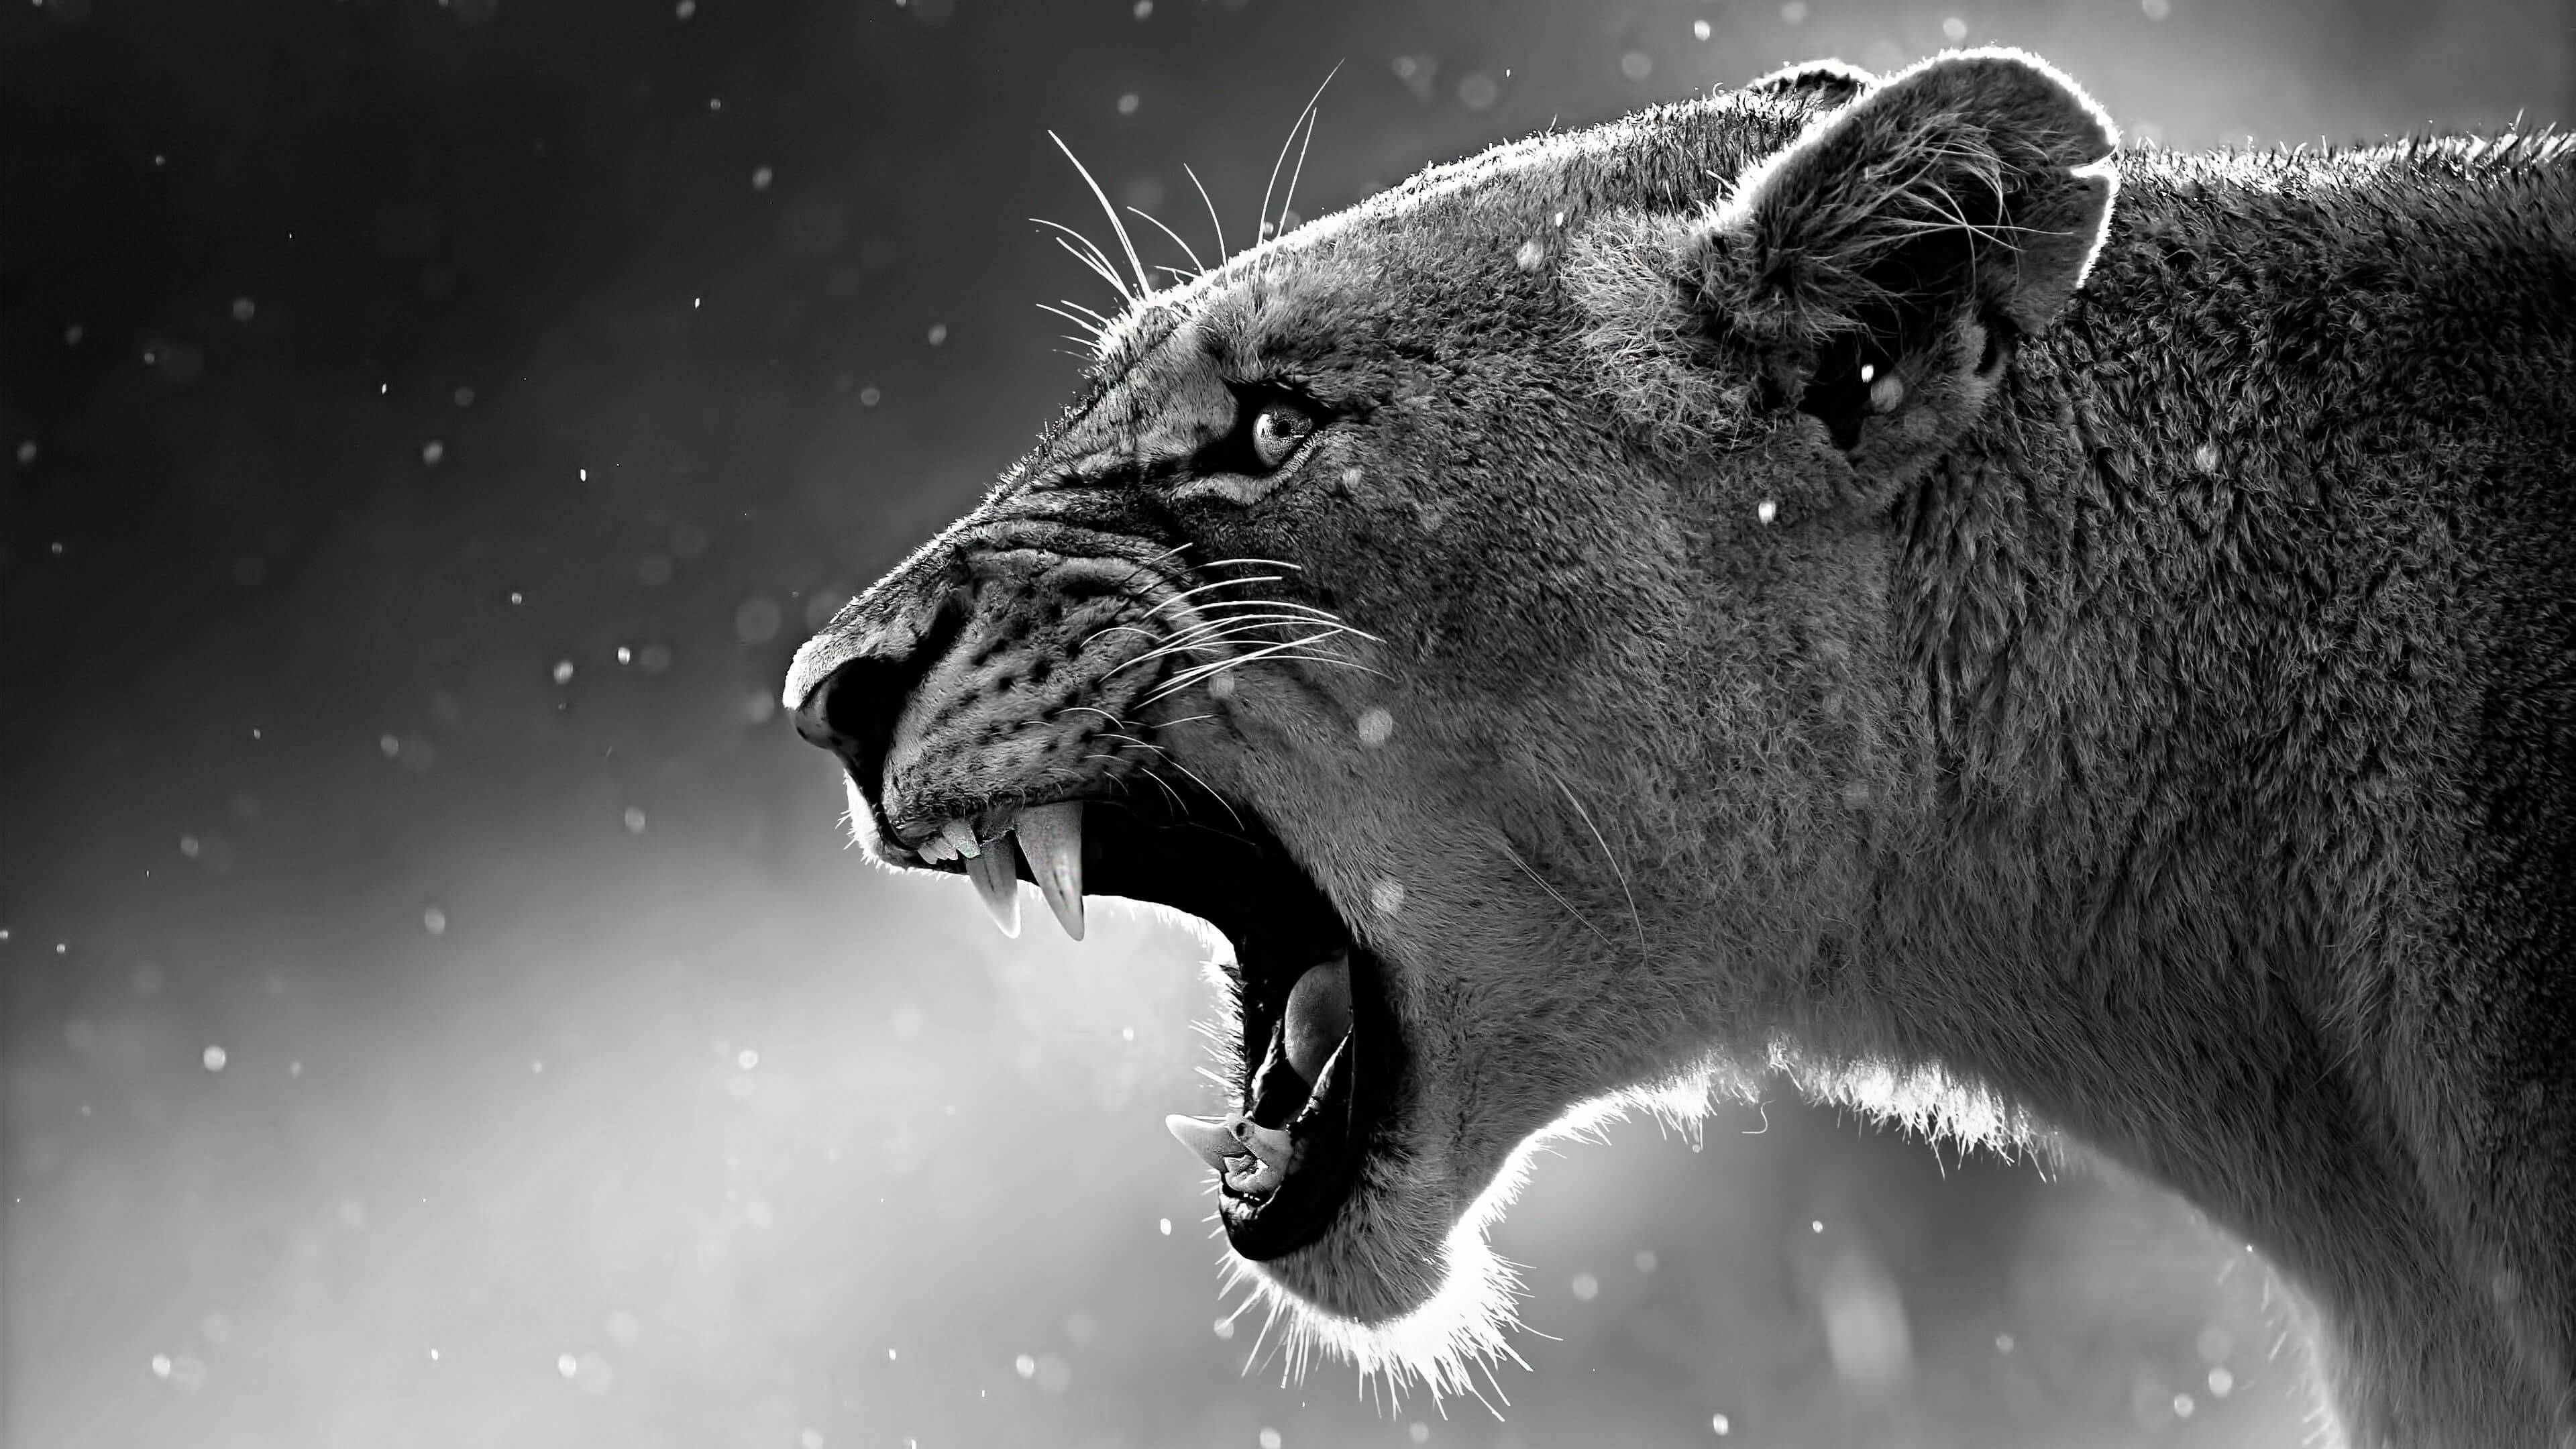 Roaring Lioness wallpaper in 360x720 resolution